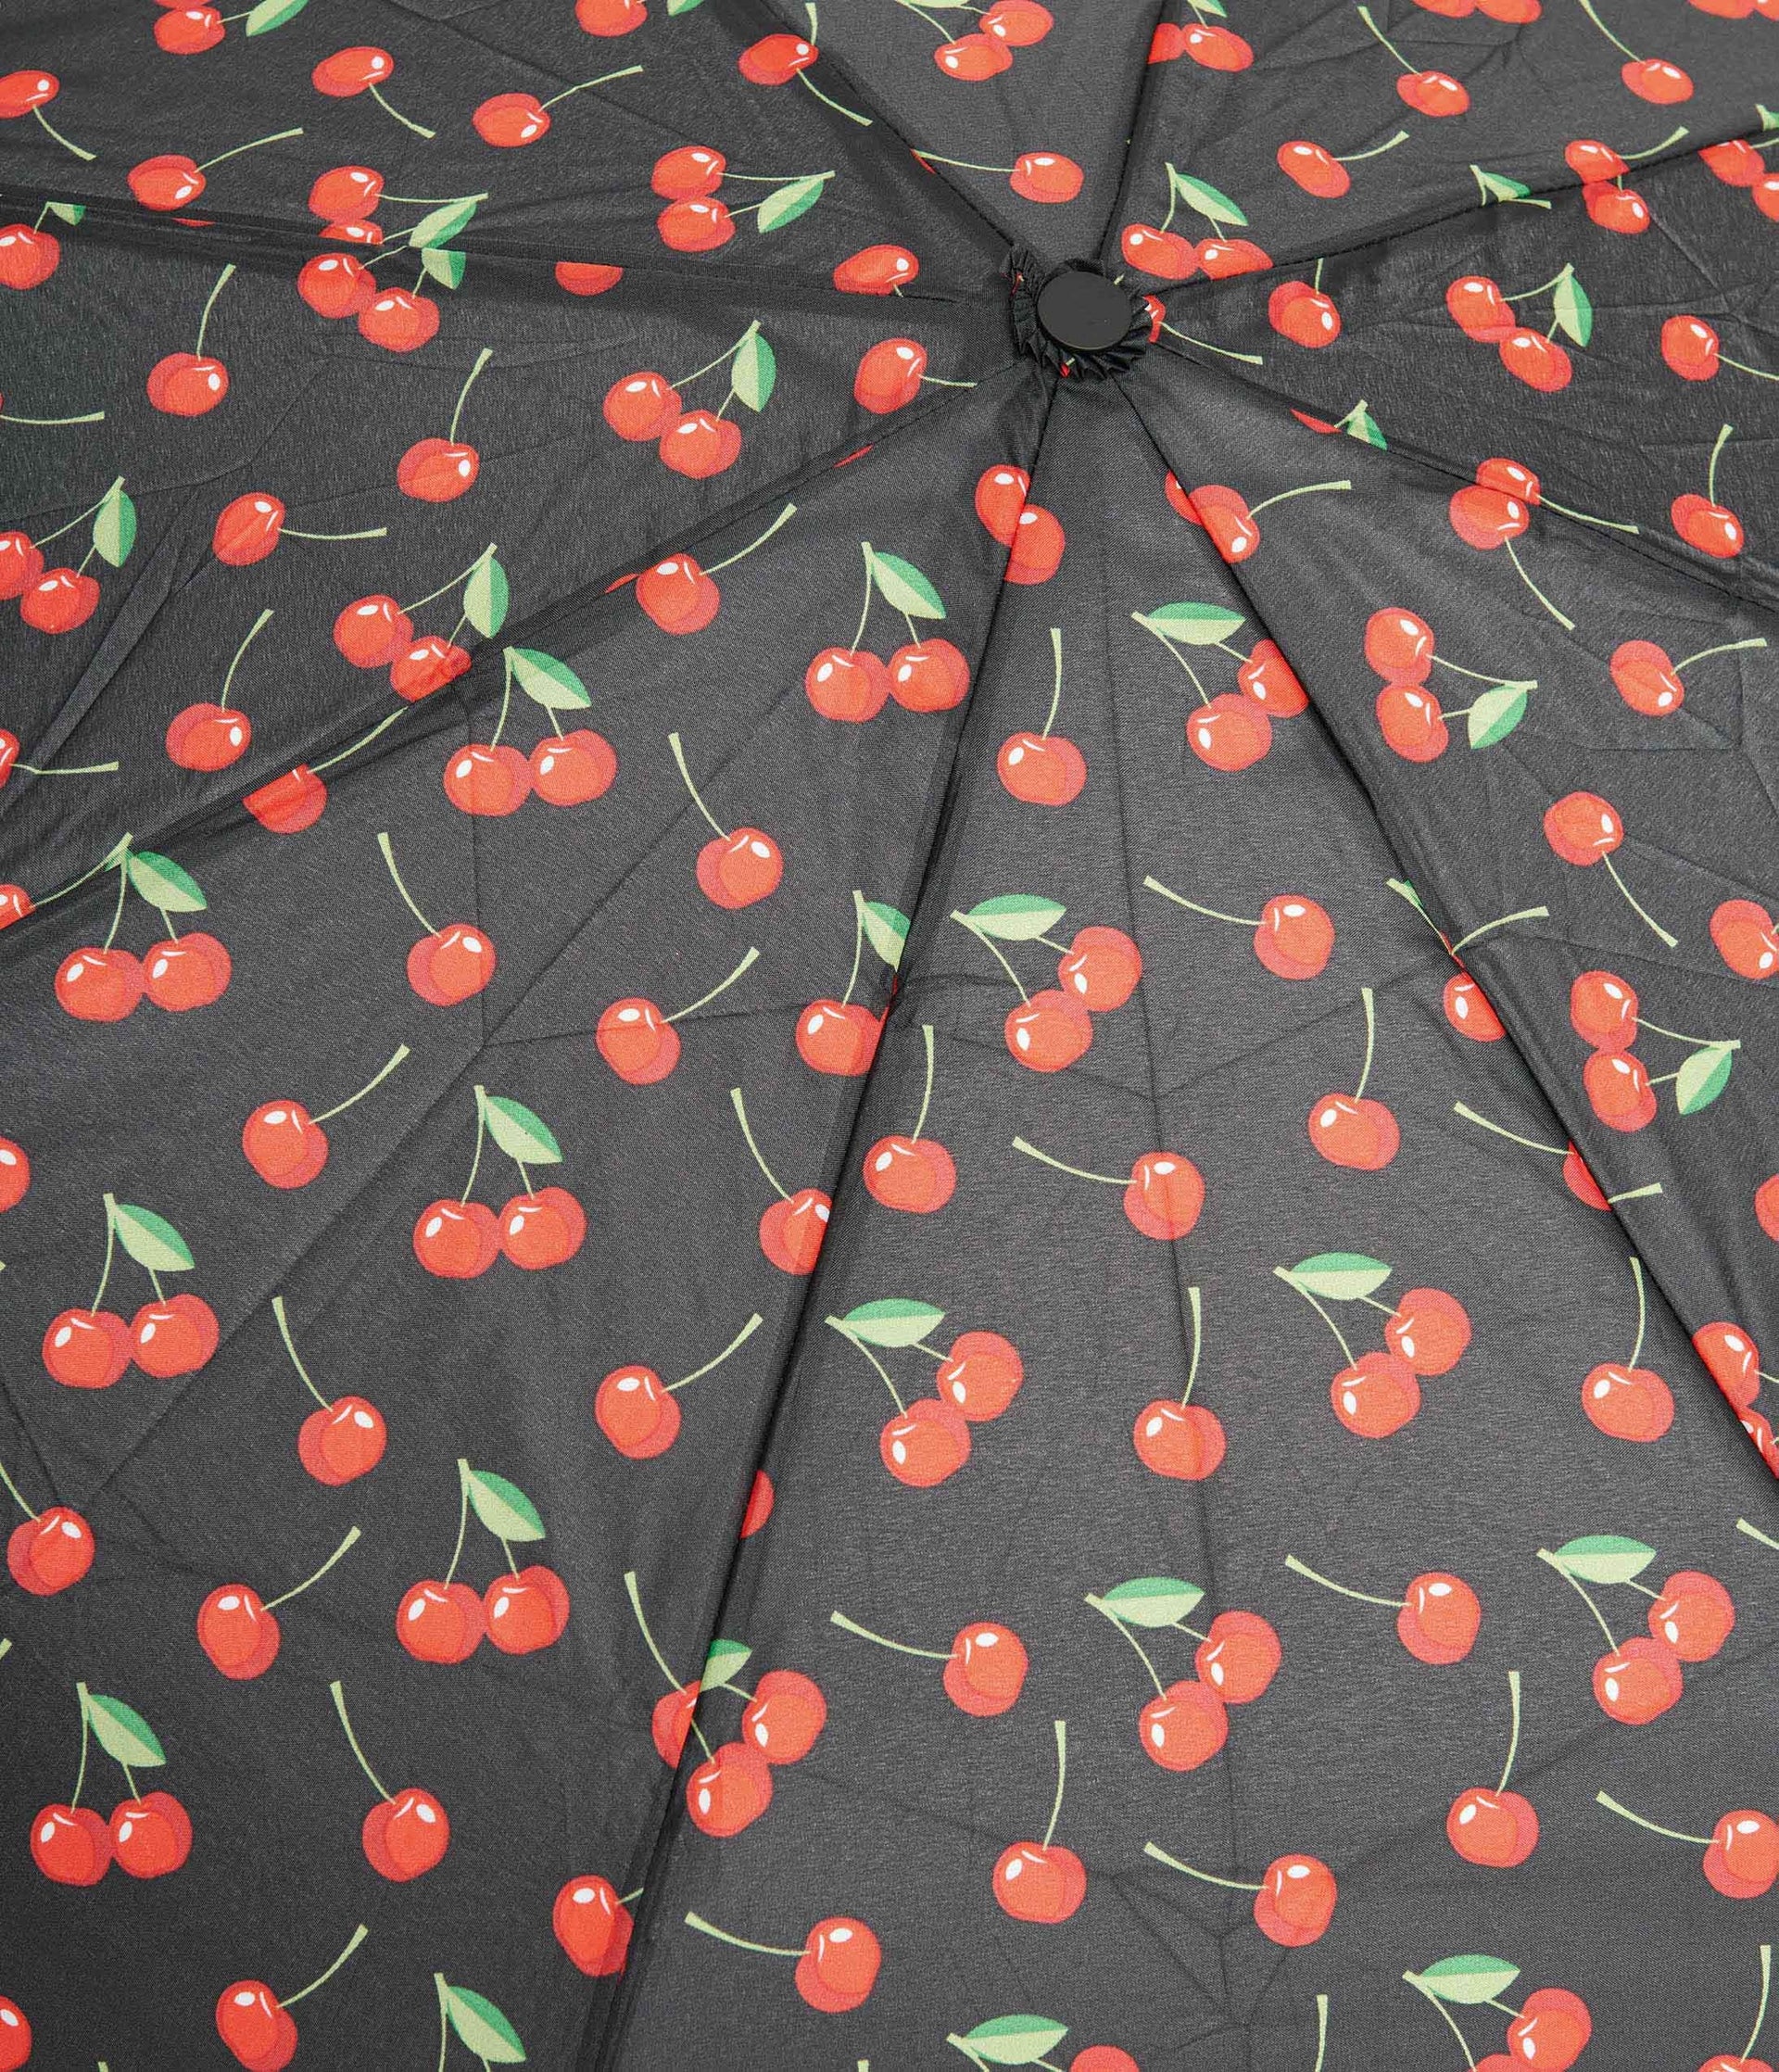 Black & Cherry Print Umbrella - Unique Vintage - Womens, ACCESSORIES, UMBRELLAS